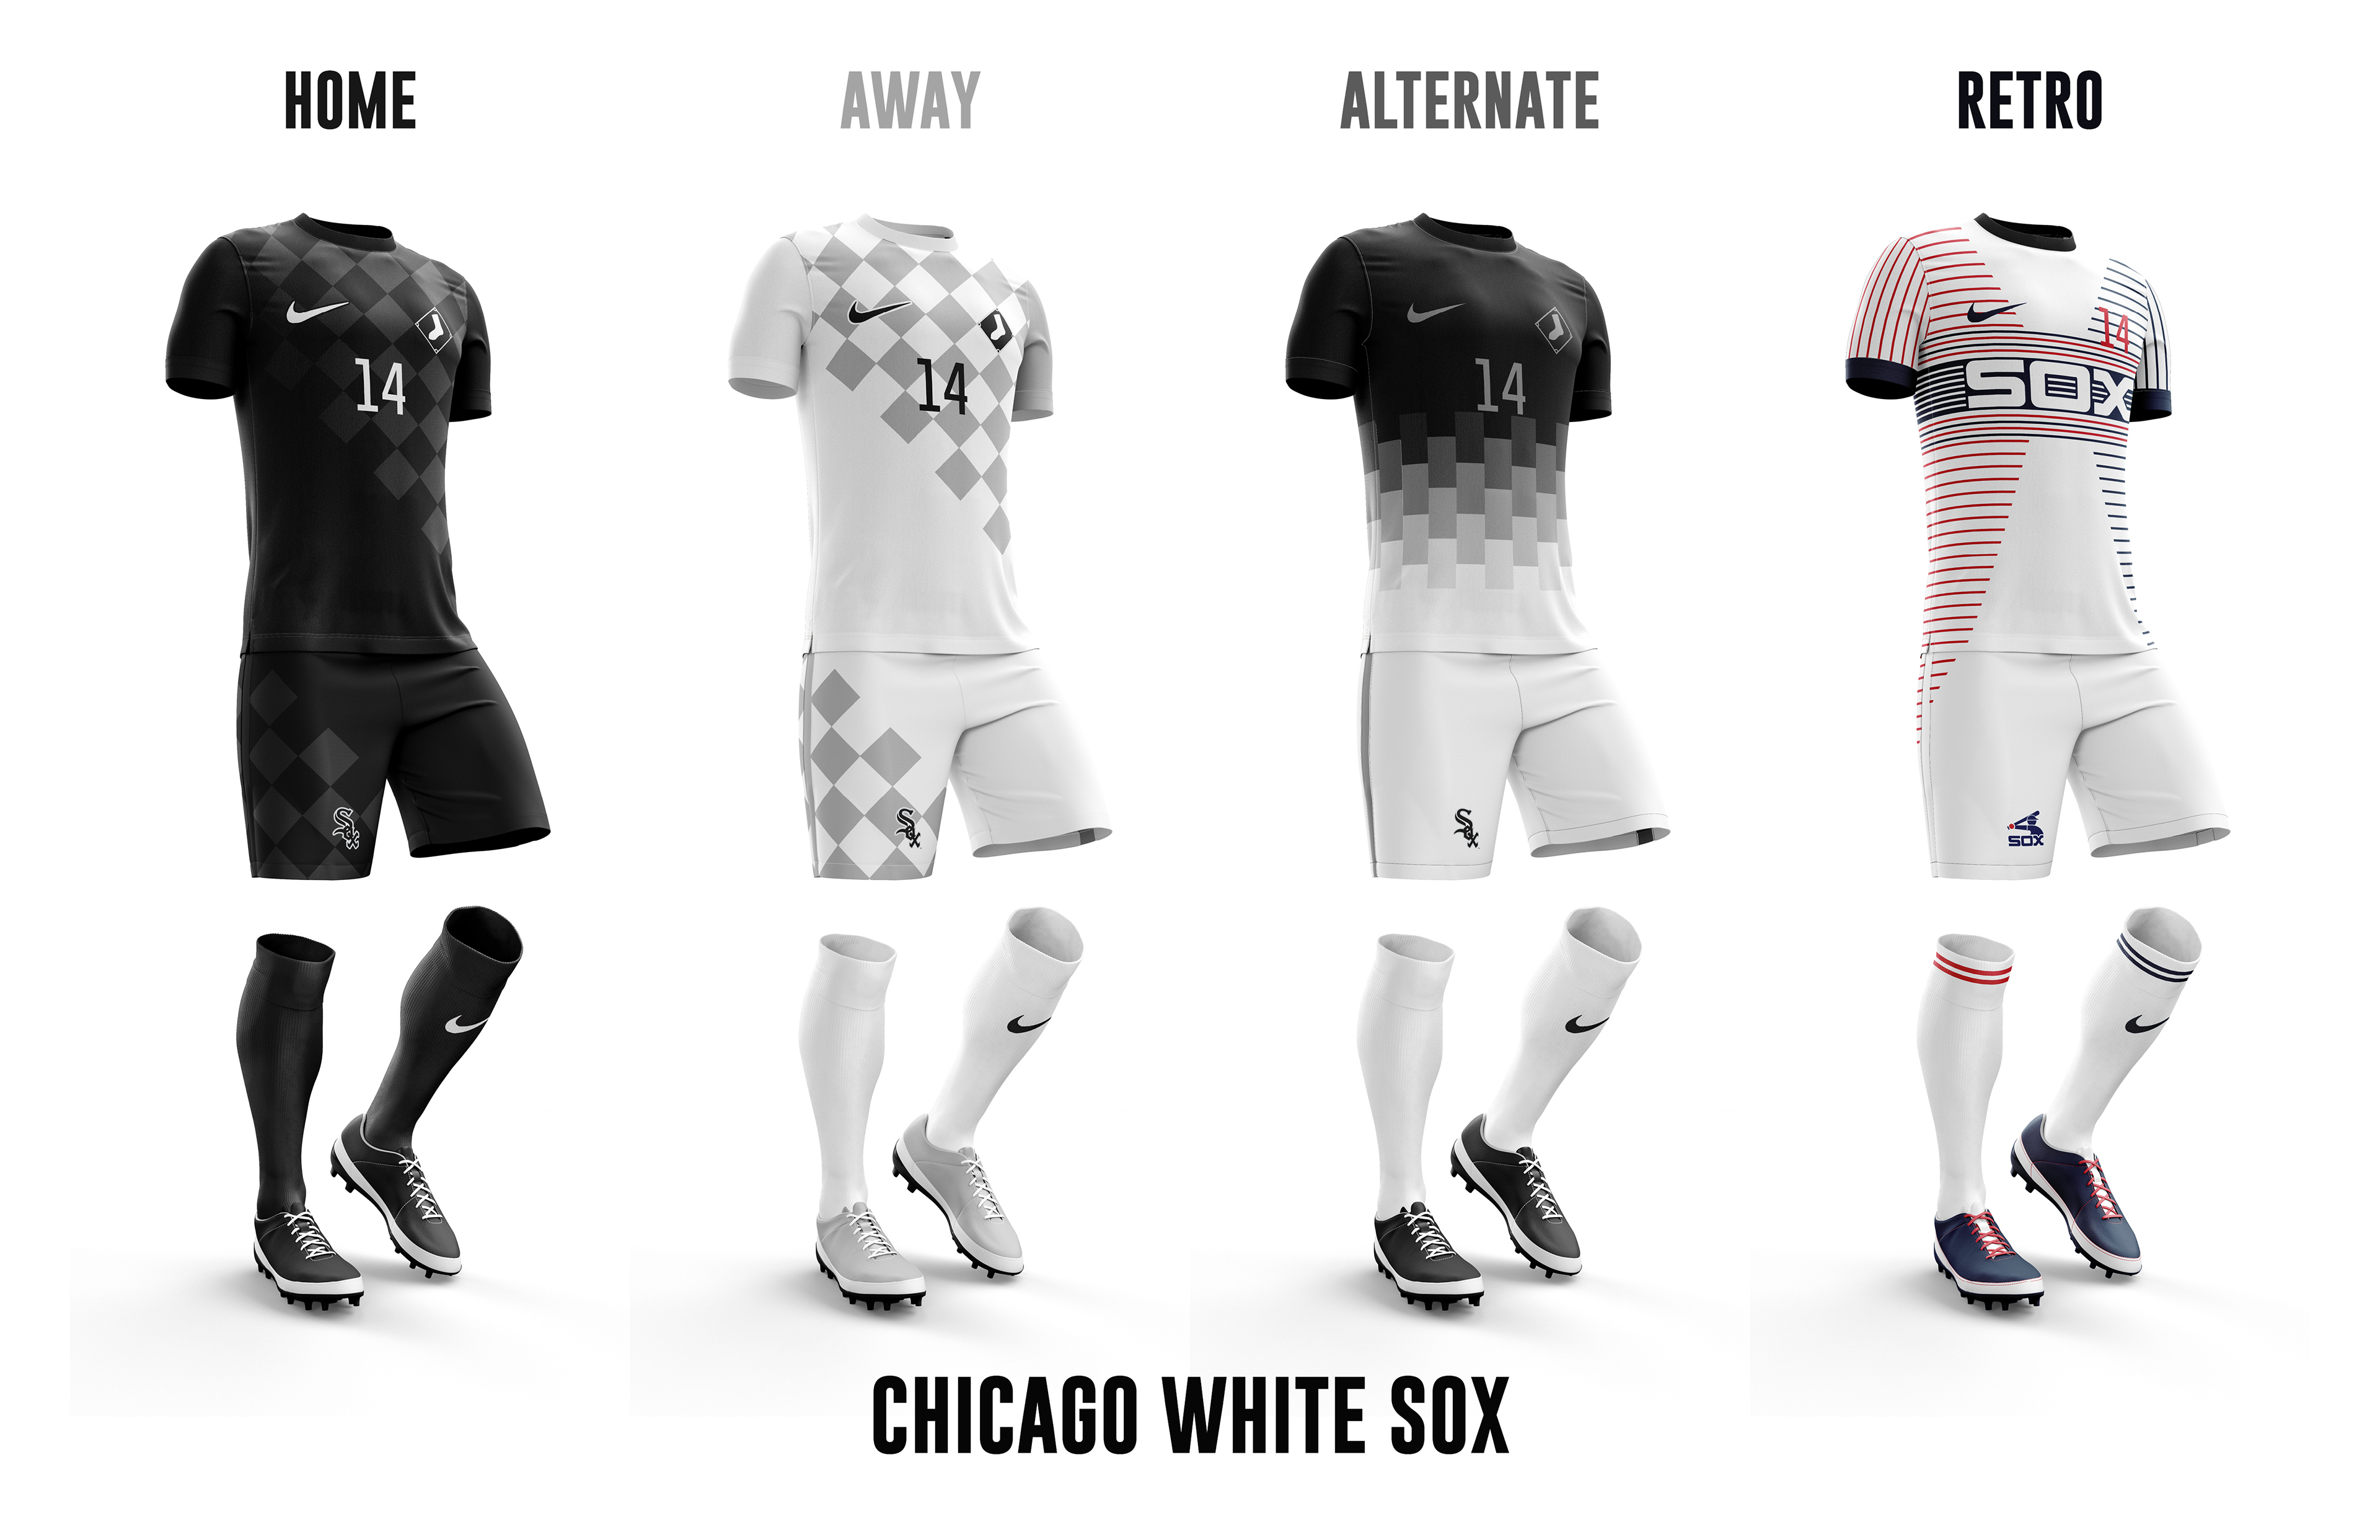 white sox alternate uniforms